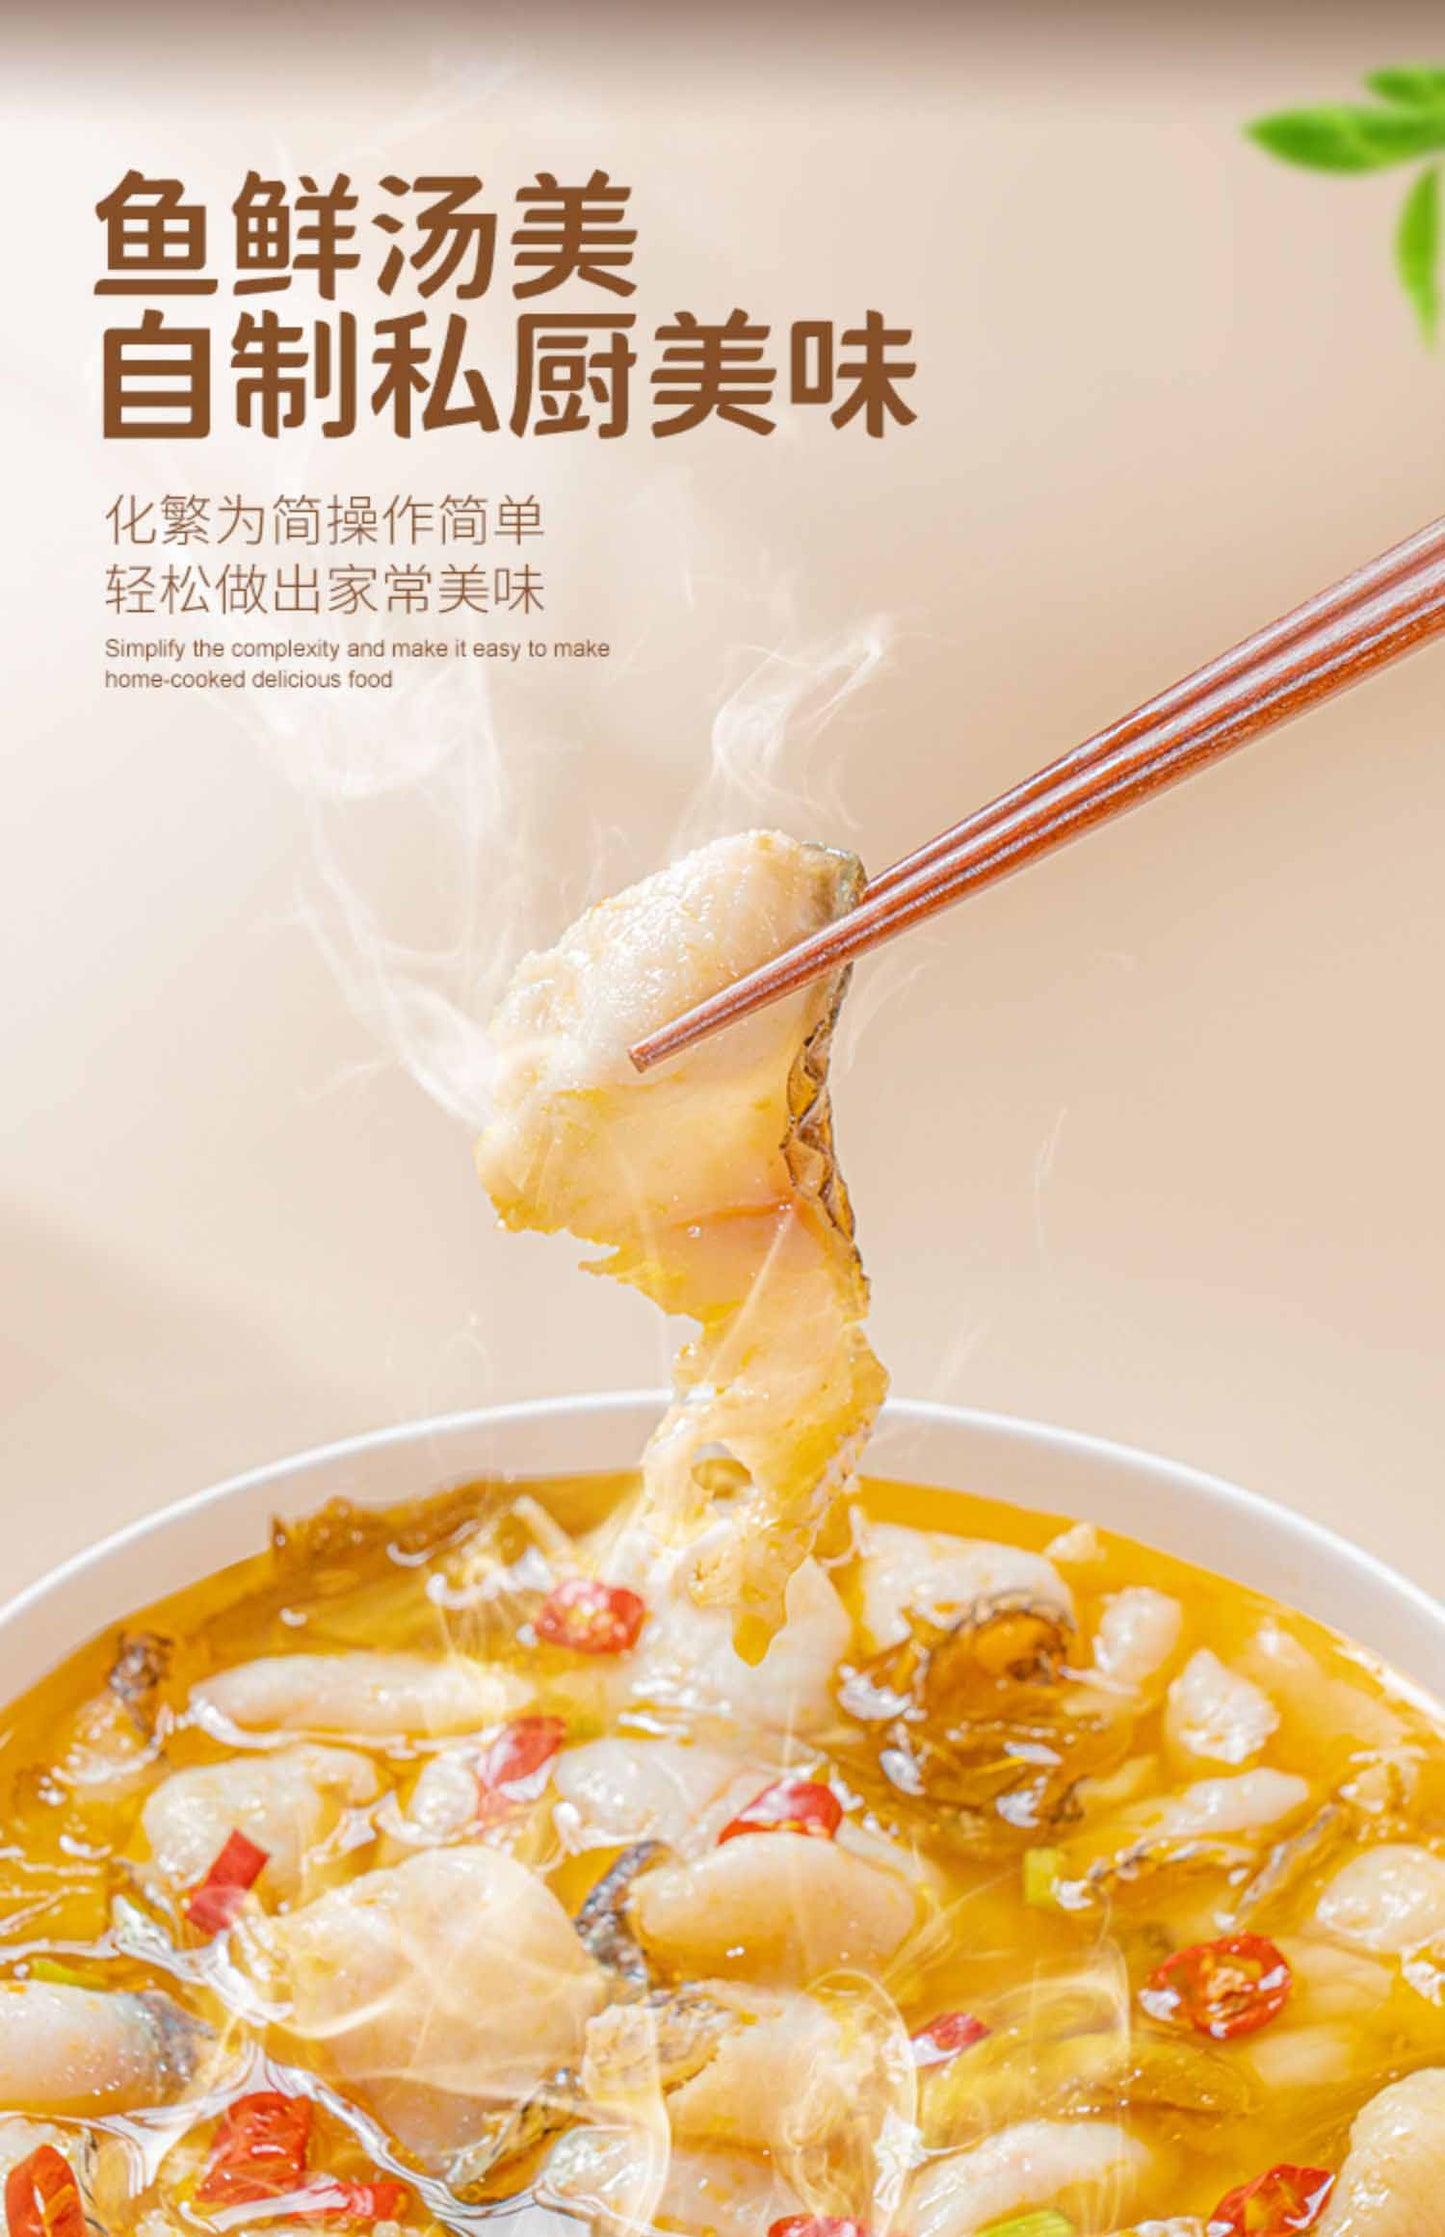 Dezhuang - Lao Tan Sauerkraut Fish Seasoning Original Flavor Hot Pot 350g